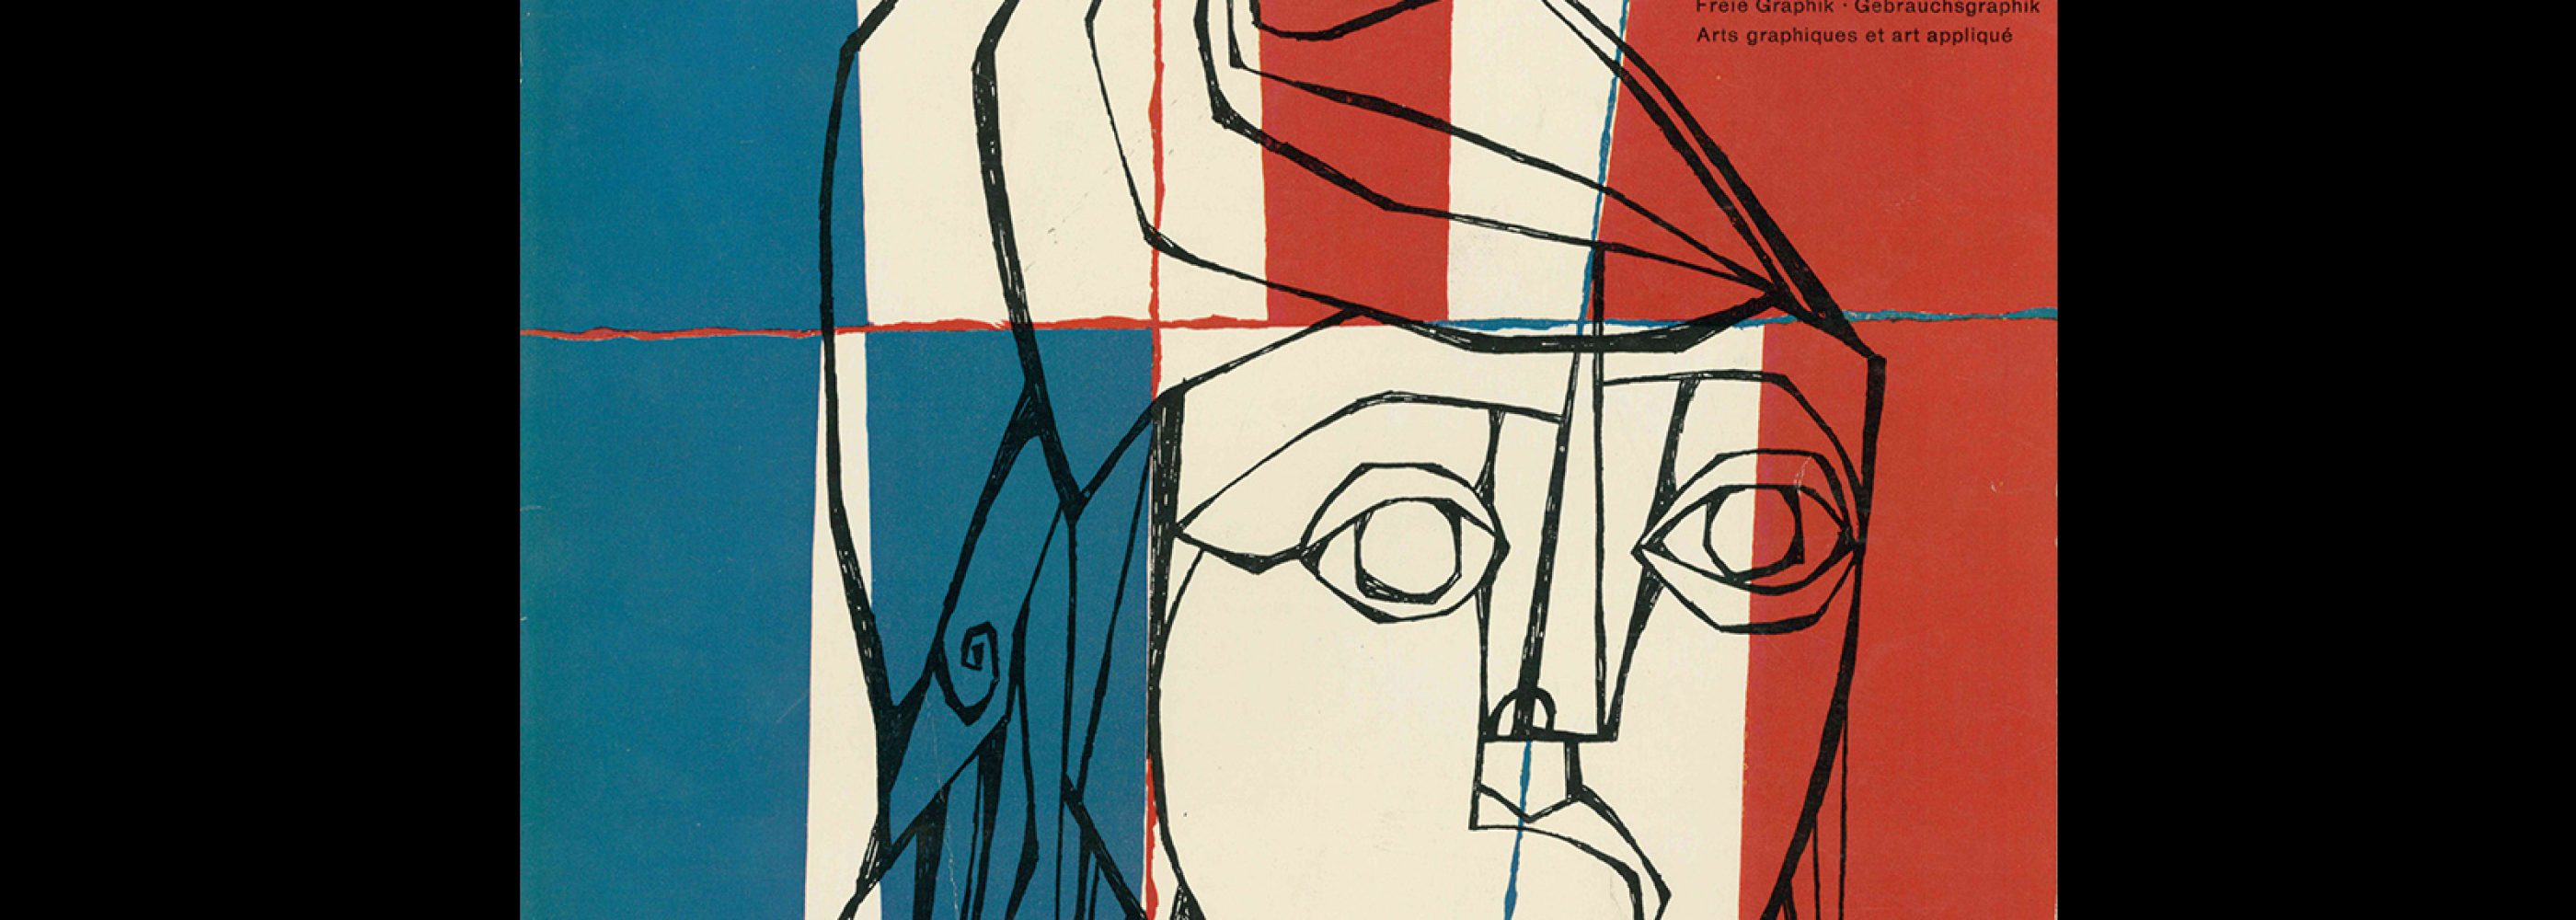 Graphis 71, 1957. Cover design by Phillipe Delessert.